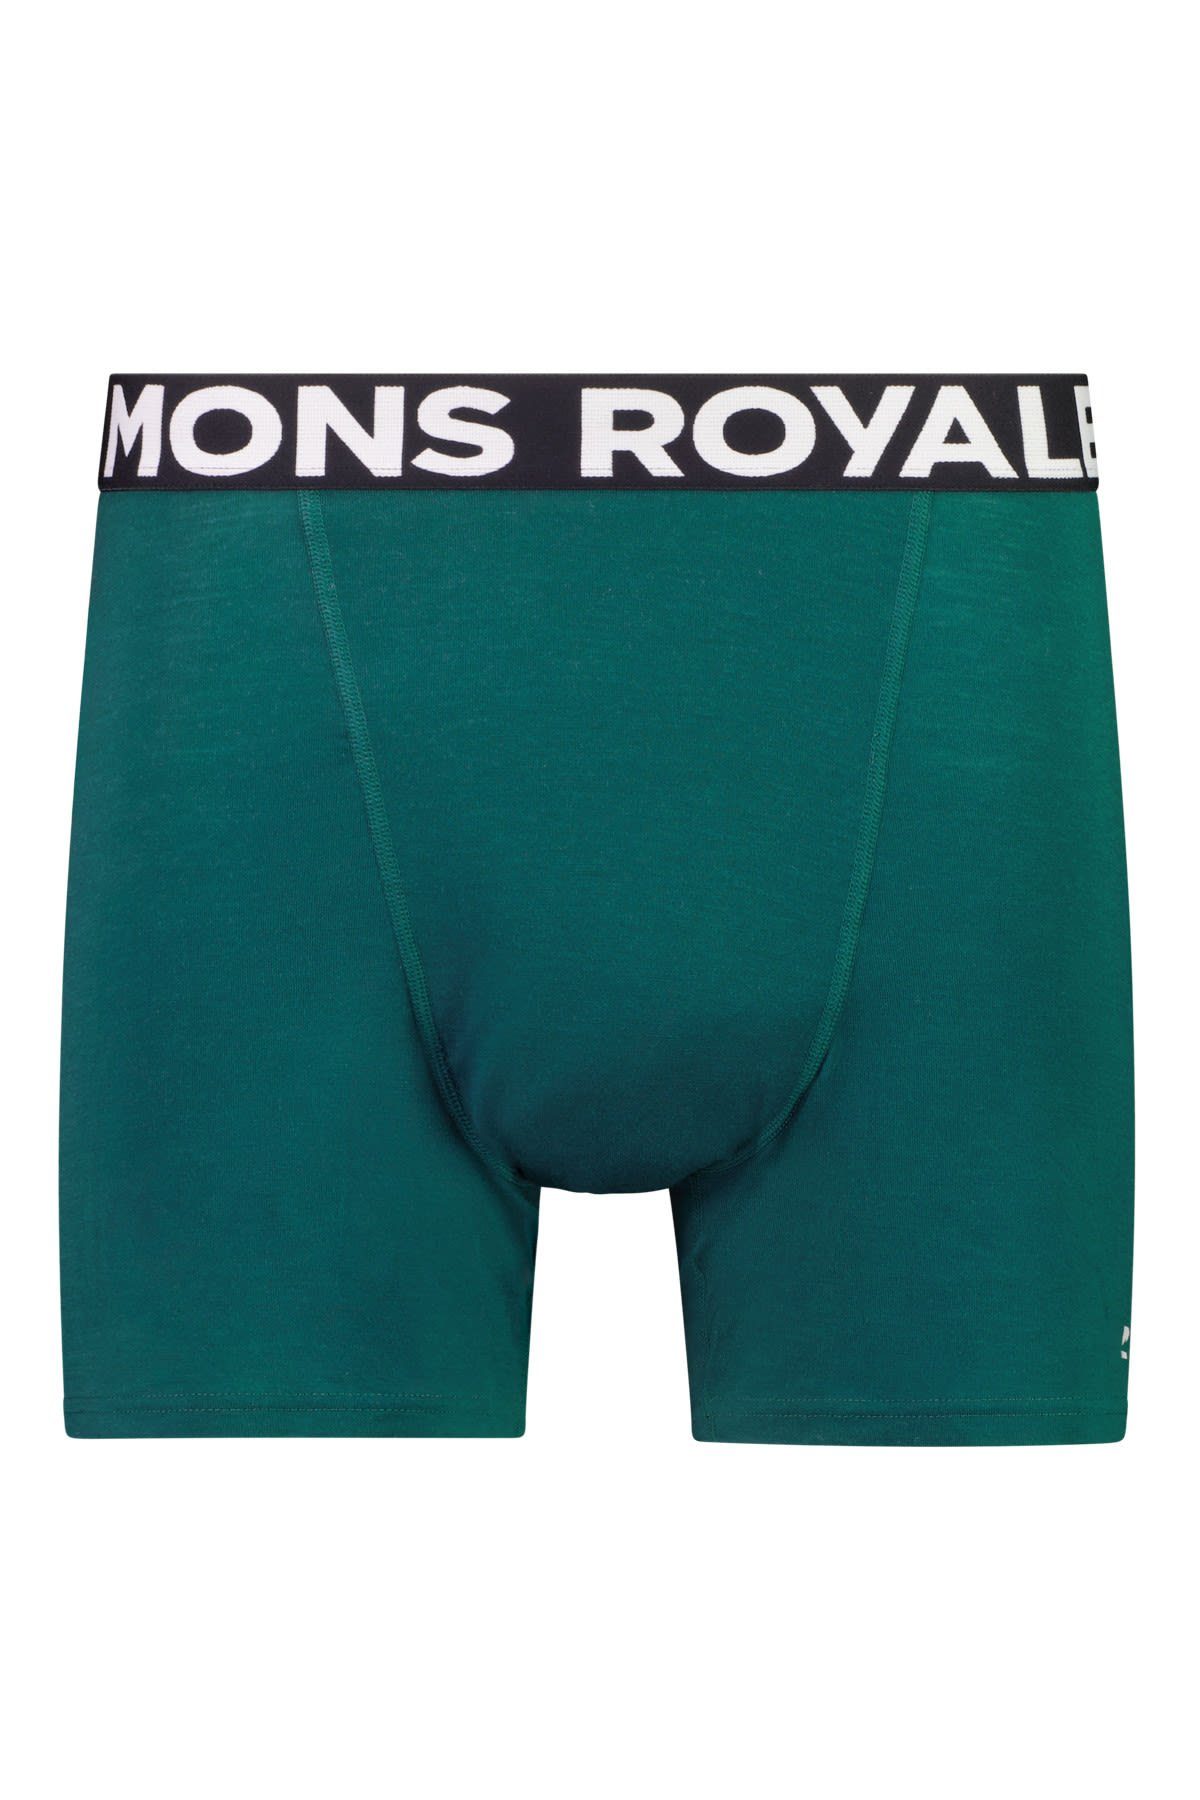 M Kurze Royale Herren 'em Evergreen Mons Mons Royale Hold Boxer Unterhose Lange